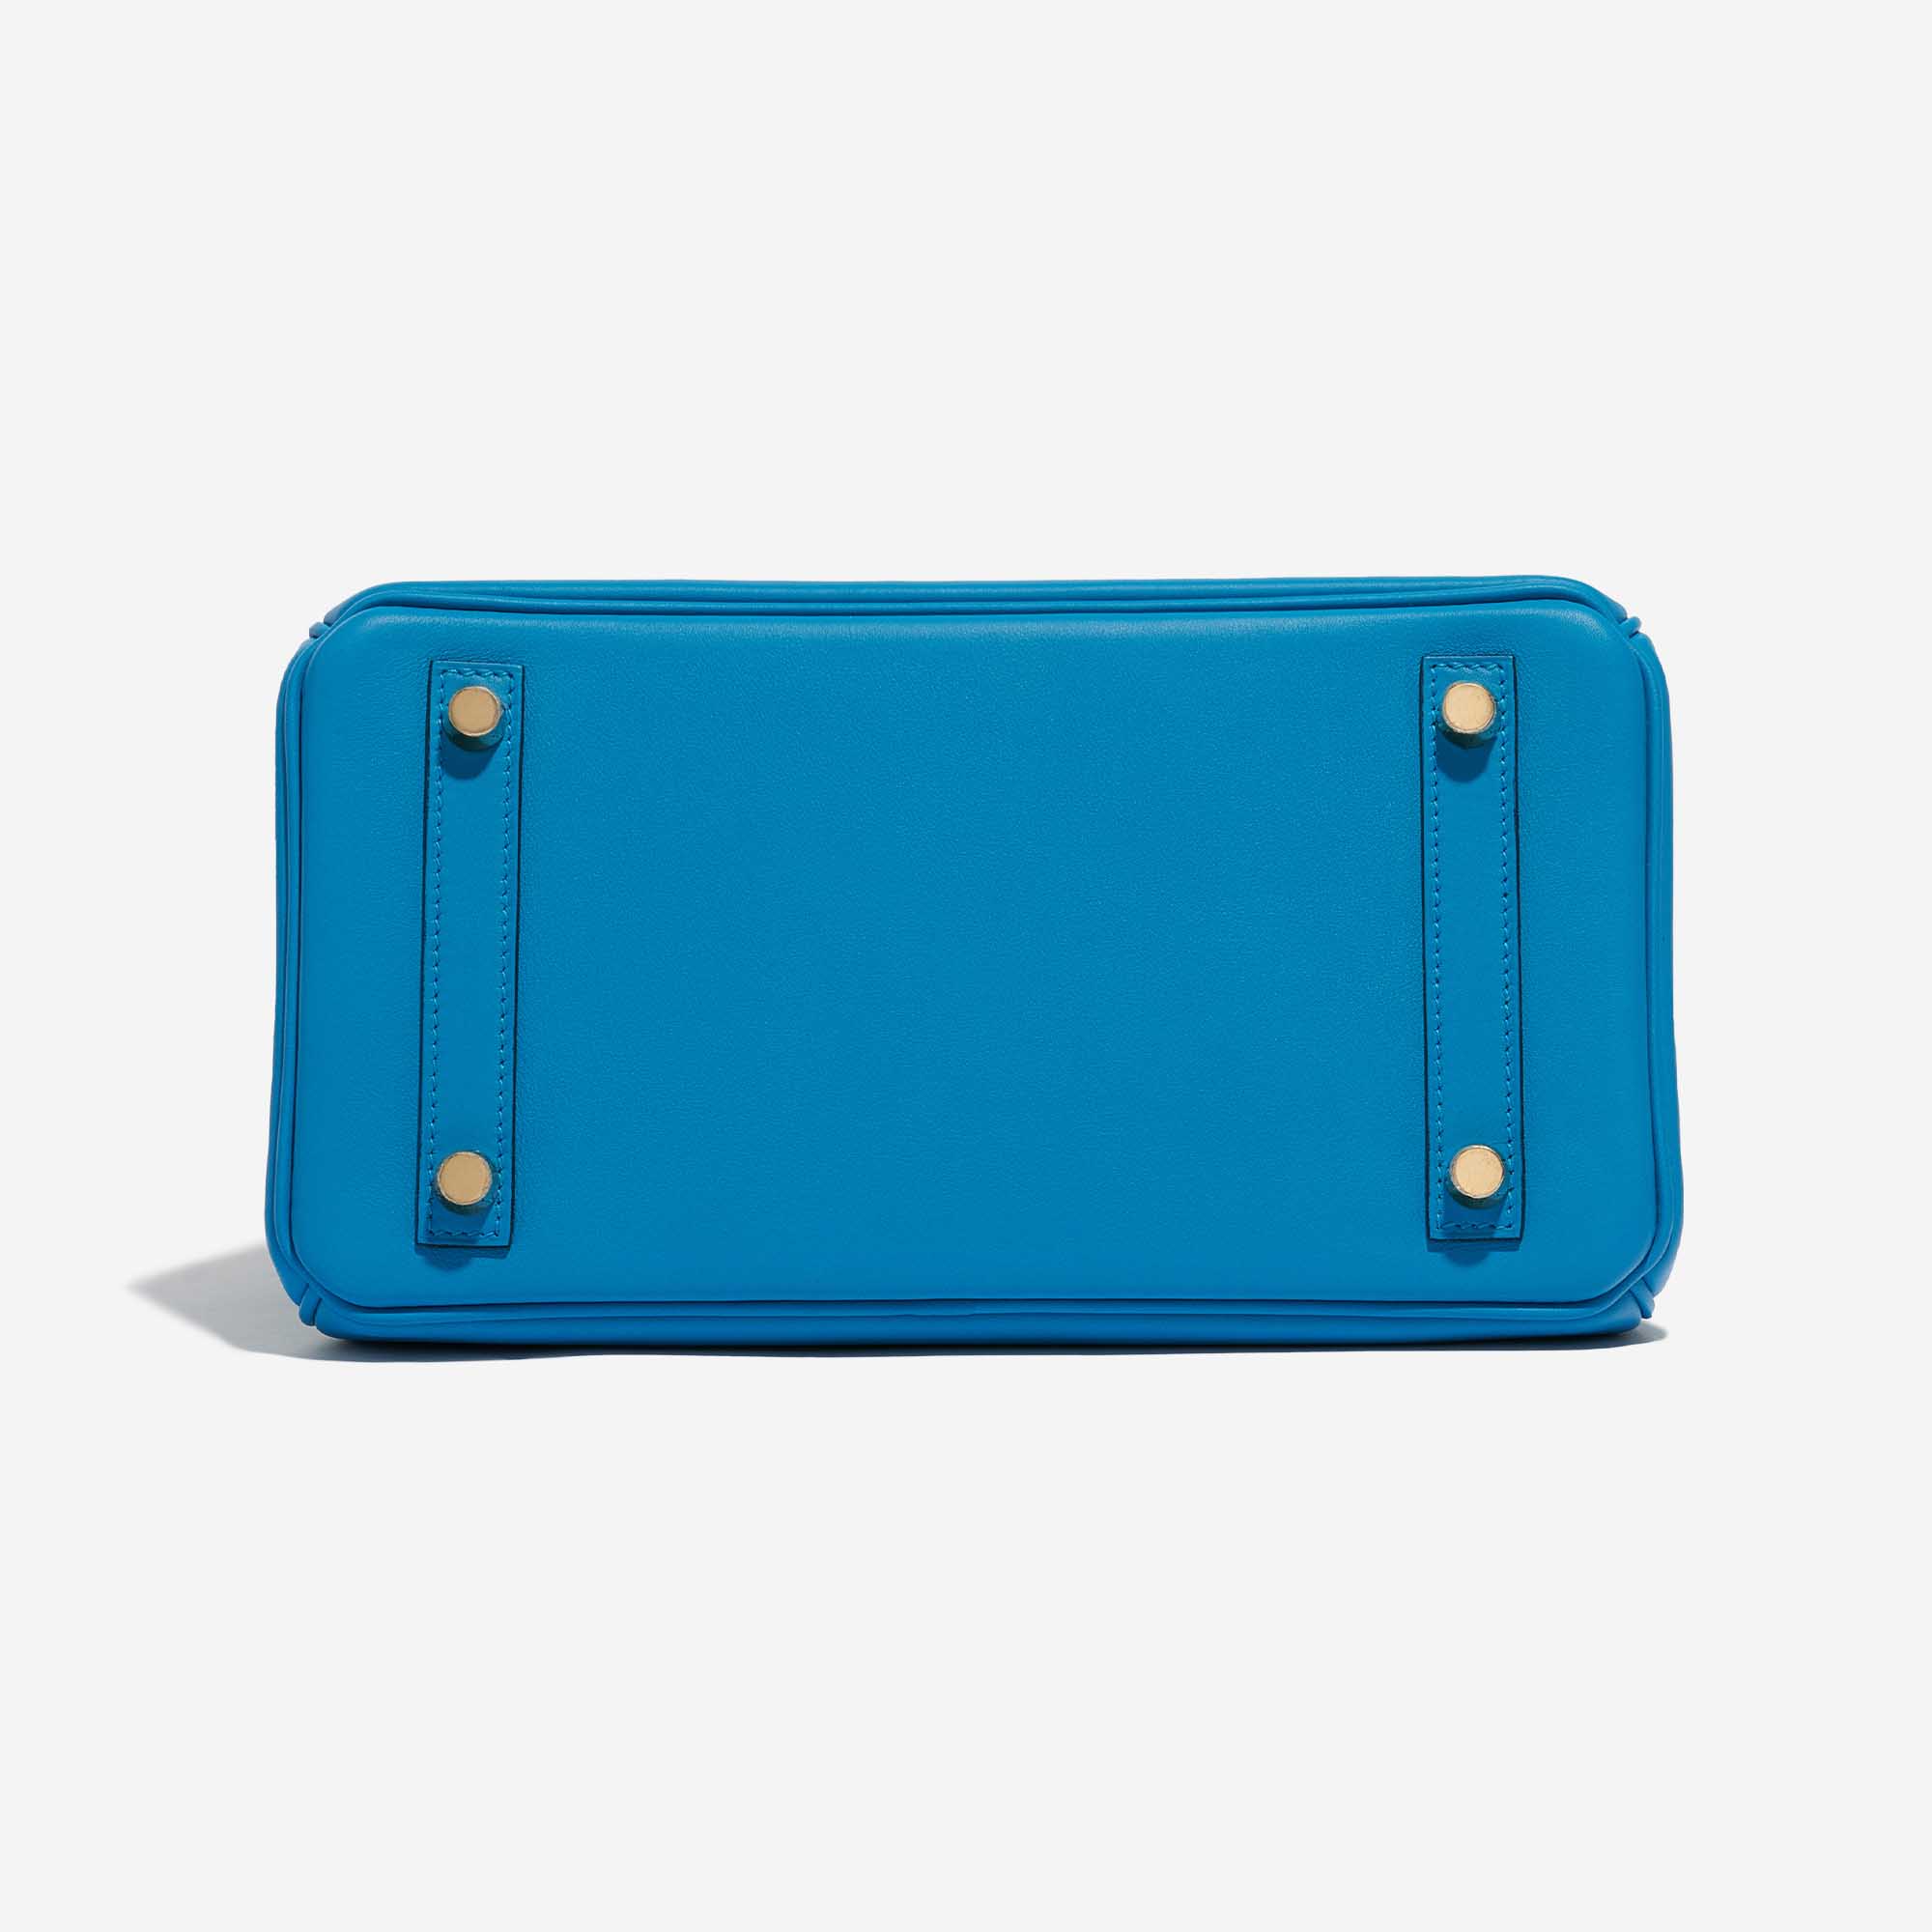 Sac Hermès Birkin 25 Swift Bleu Frida Bleu Fond | Vendez votre sac de créateur sur Saclab.com